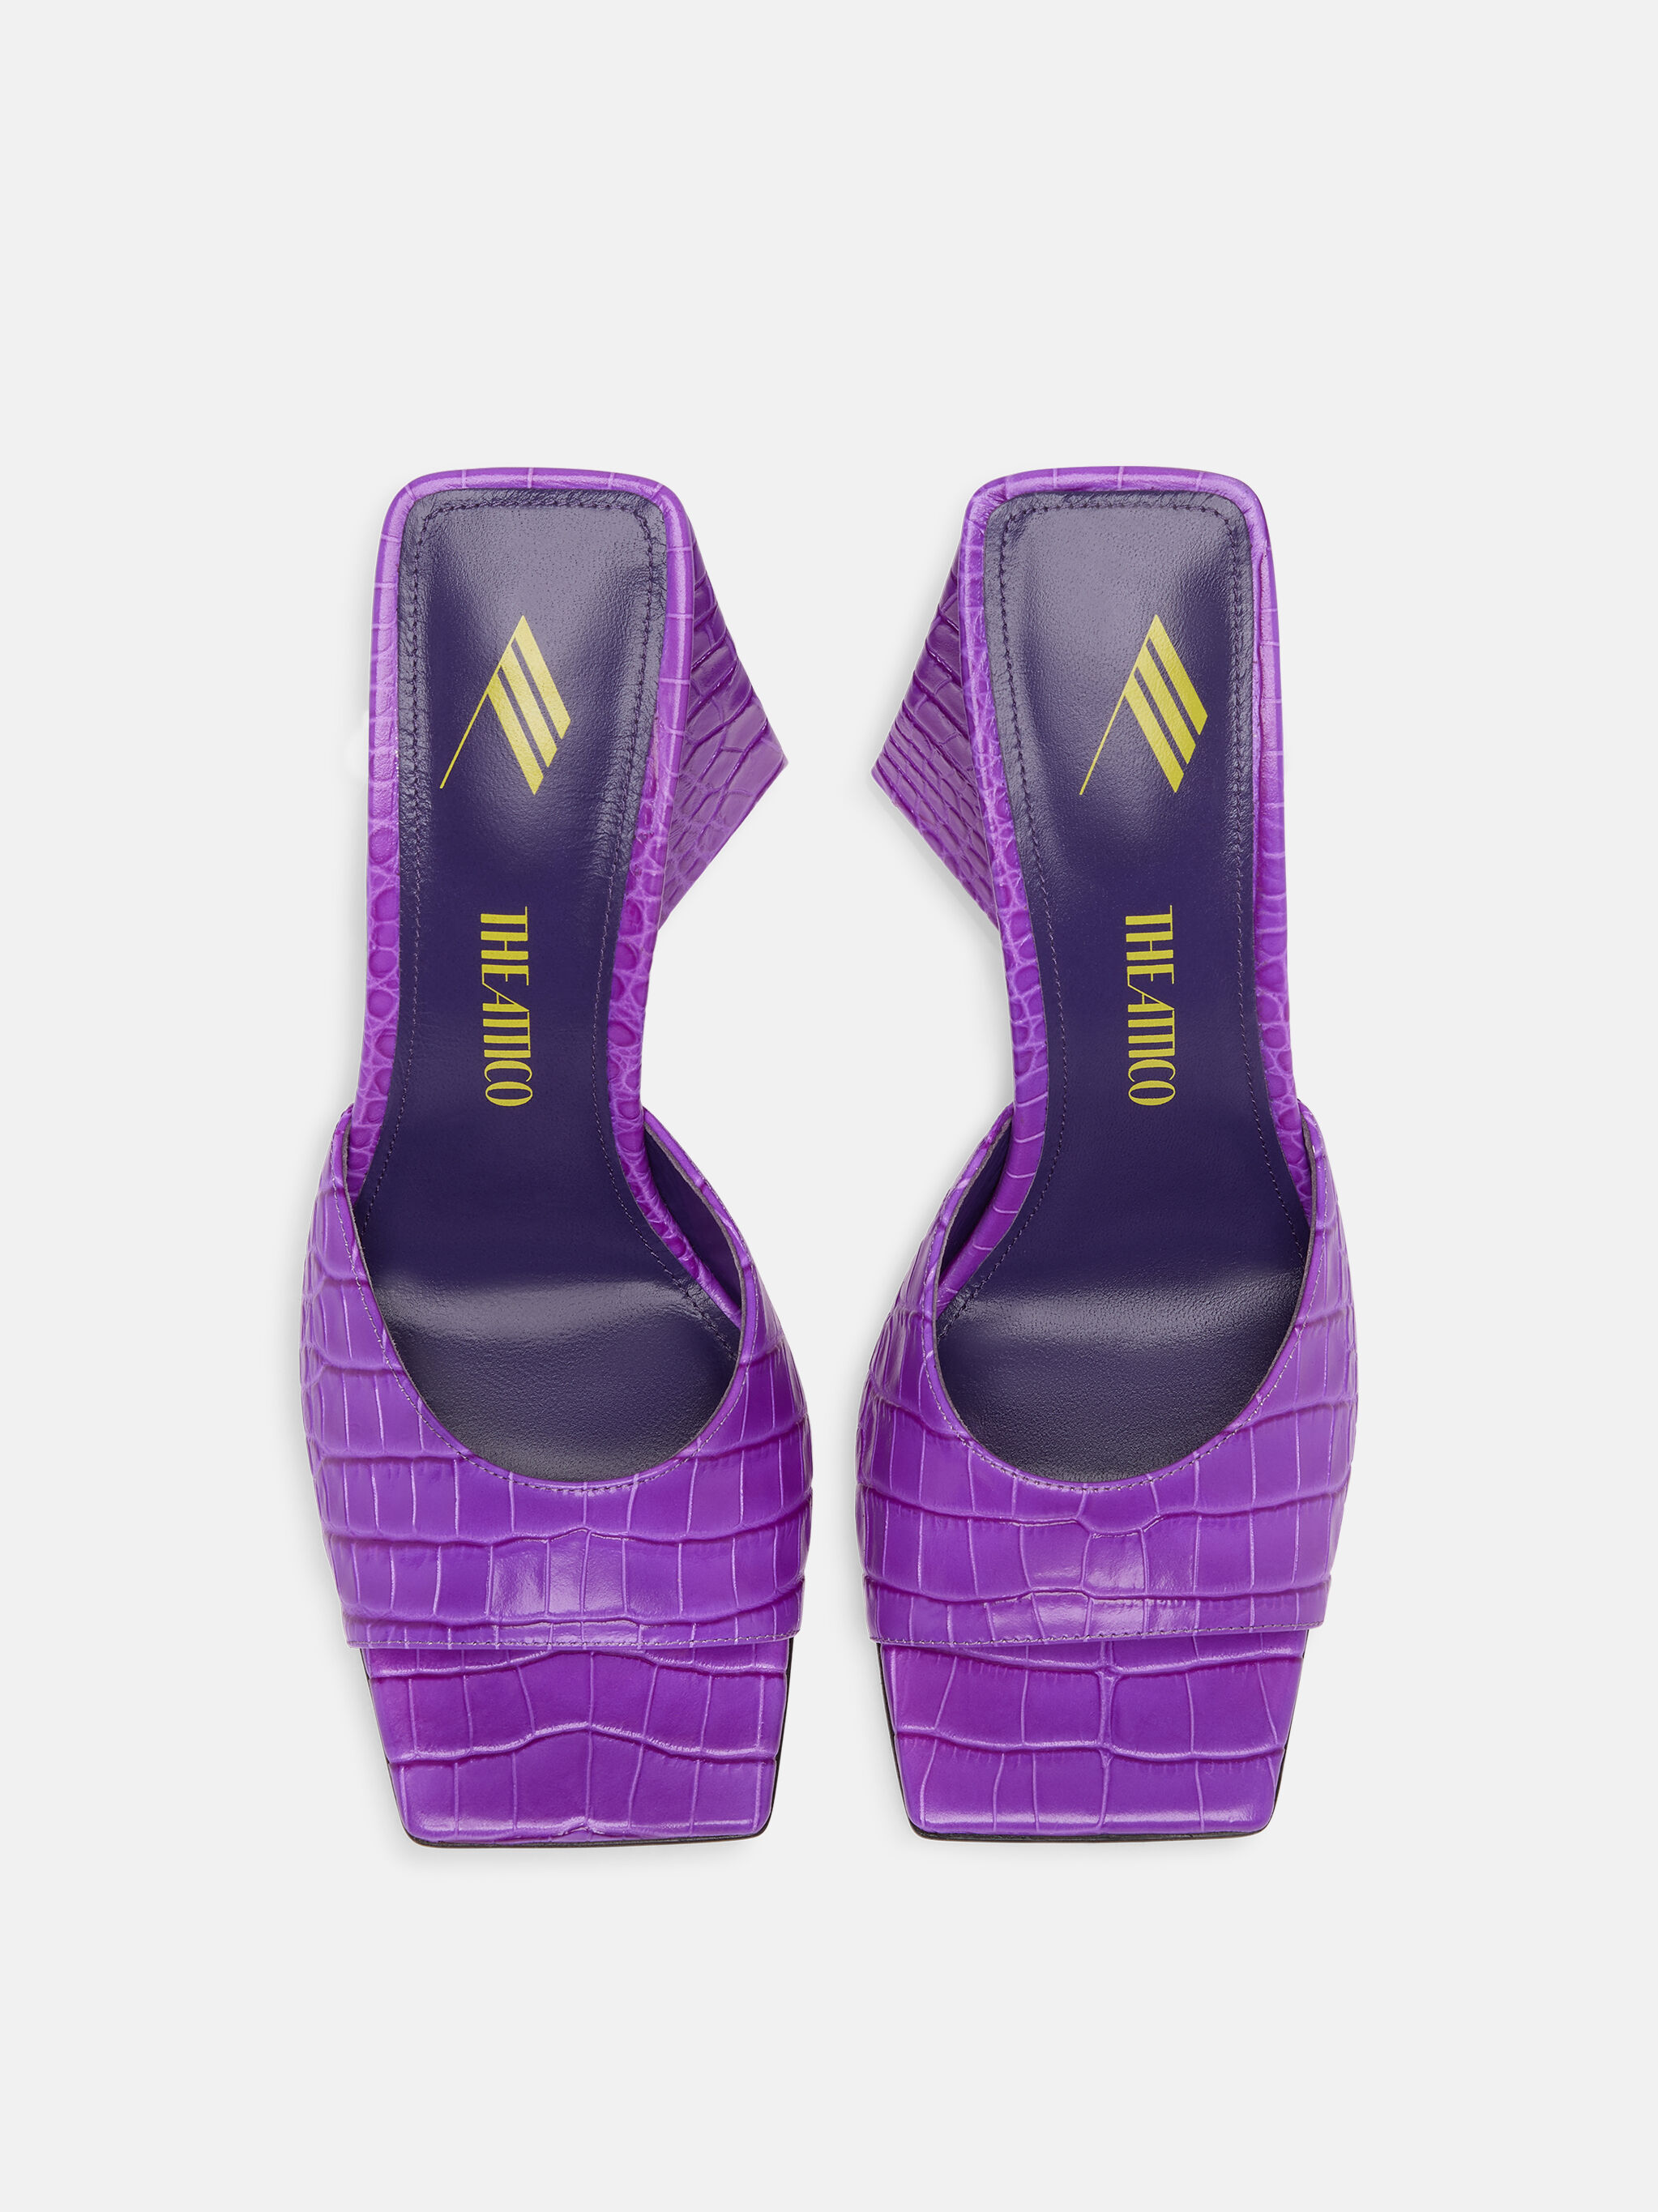 Womens Shoes Heels Mule shoes - Save 15% Purple The Attico Leather Devon Mule 115mm Croco in Neon Violet 